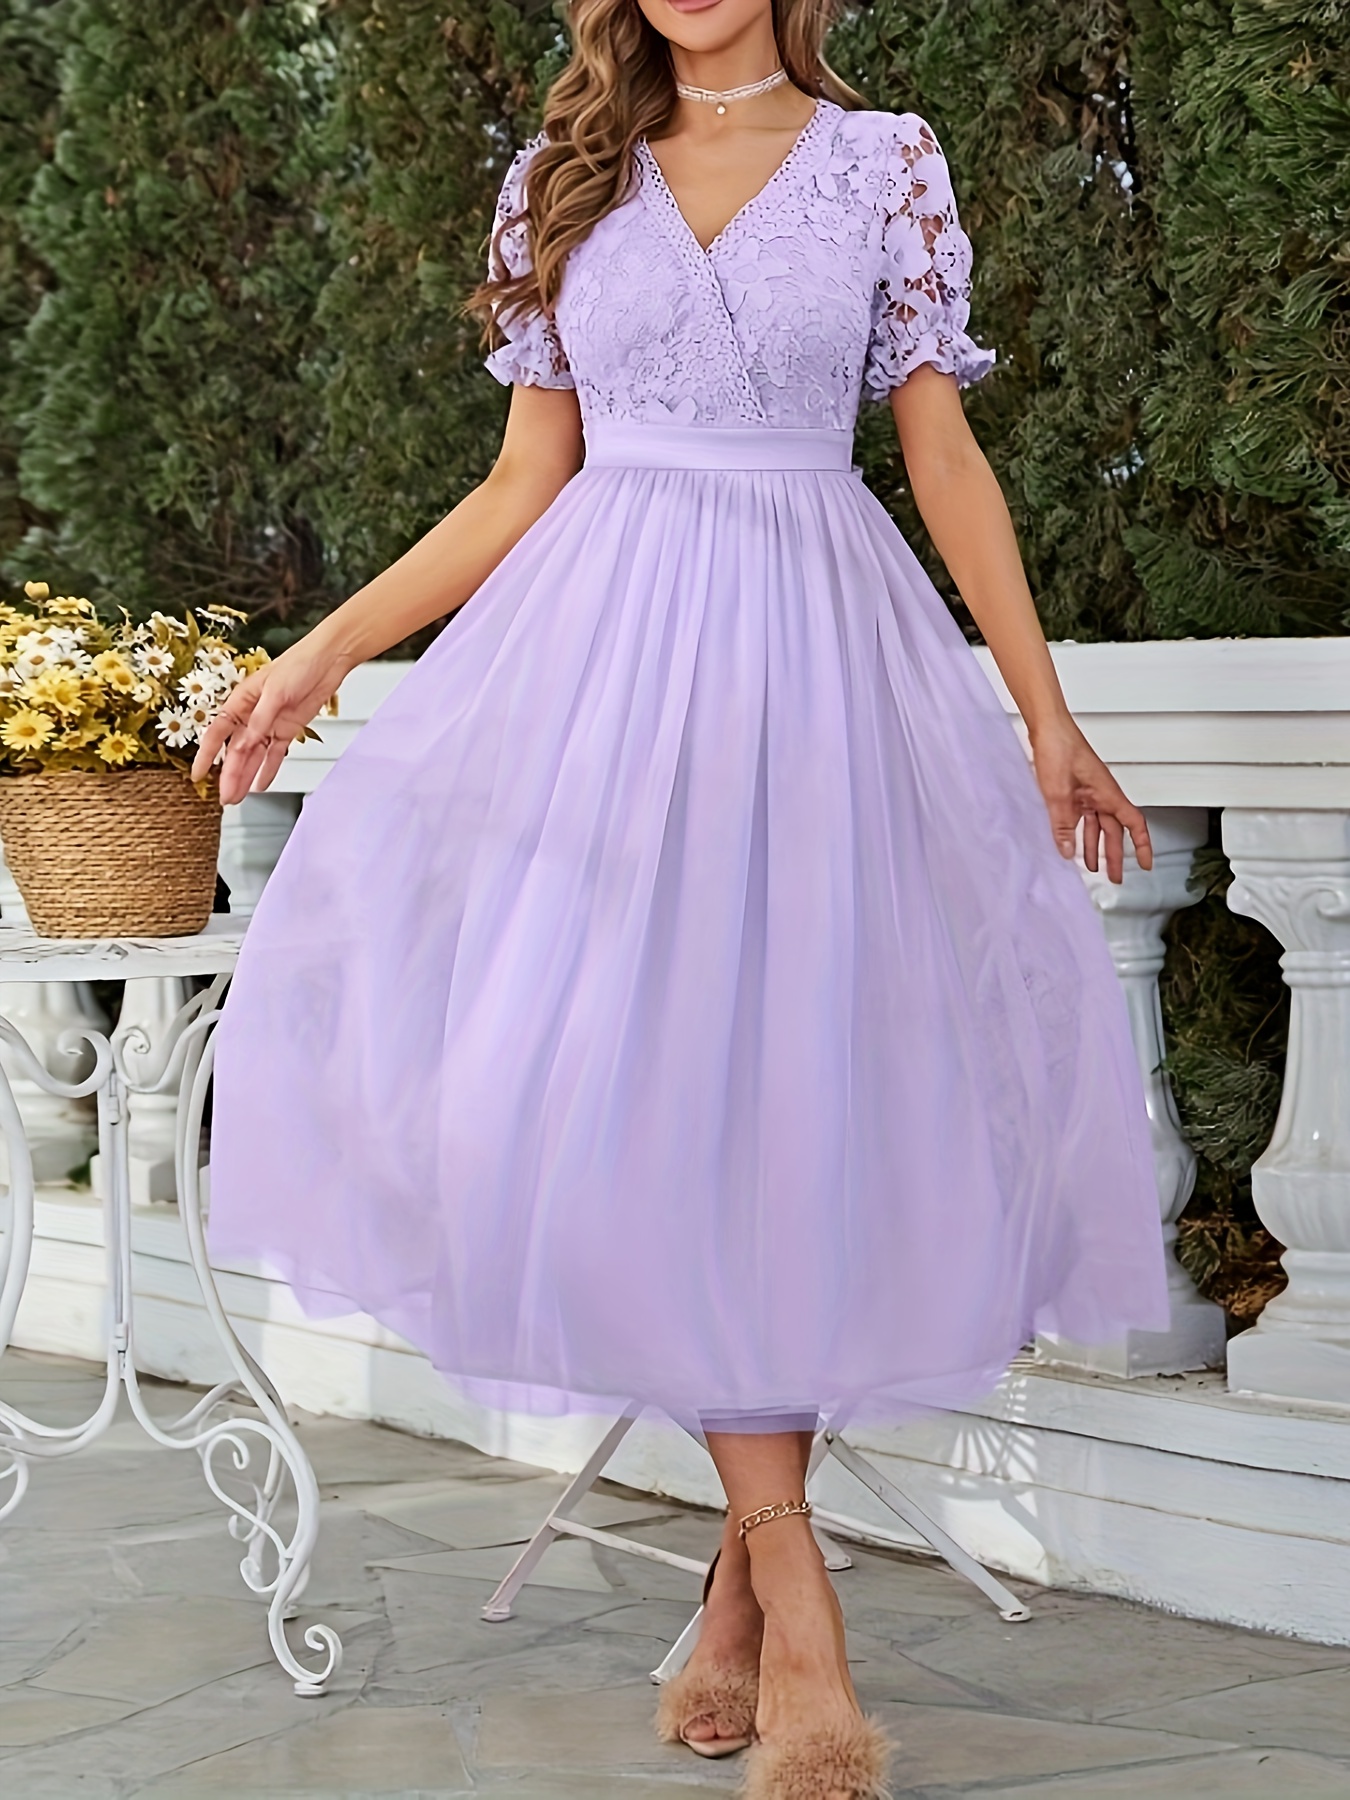 Contrast Lace Solid Dress, Elegant V Neck Puff Sleeve Bow Back Mesh Dress,  Women's Clothing